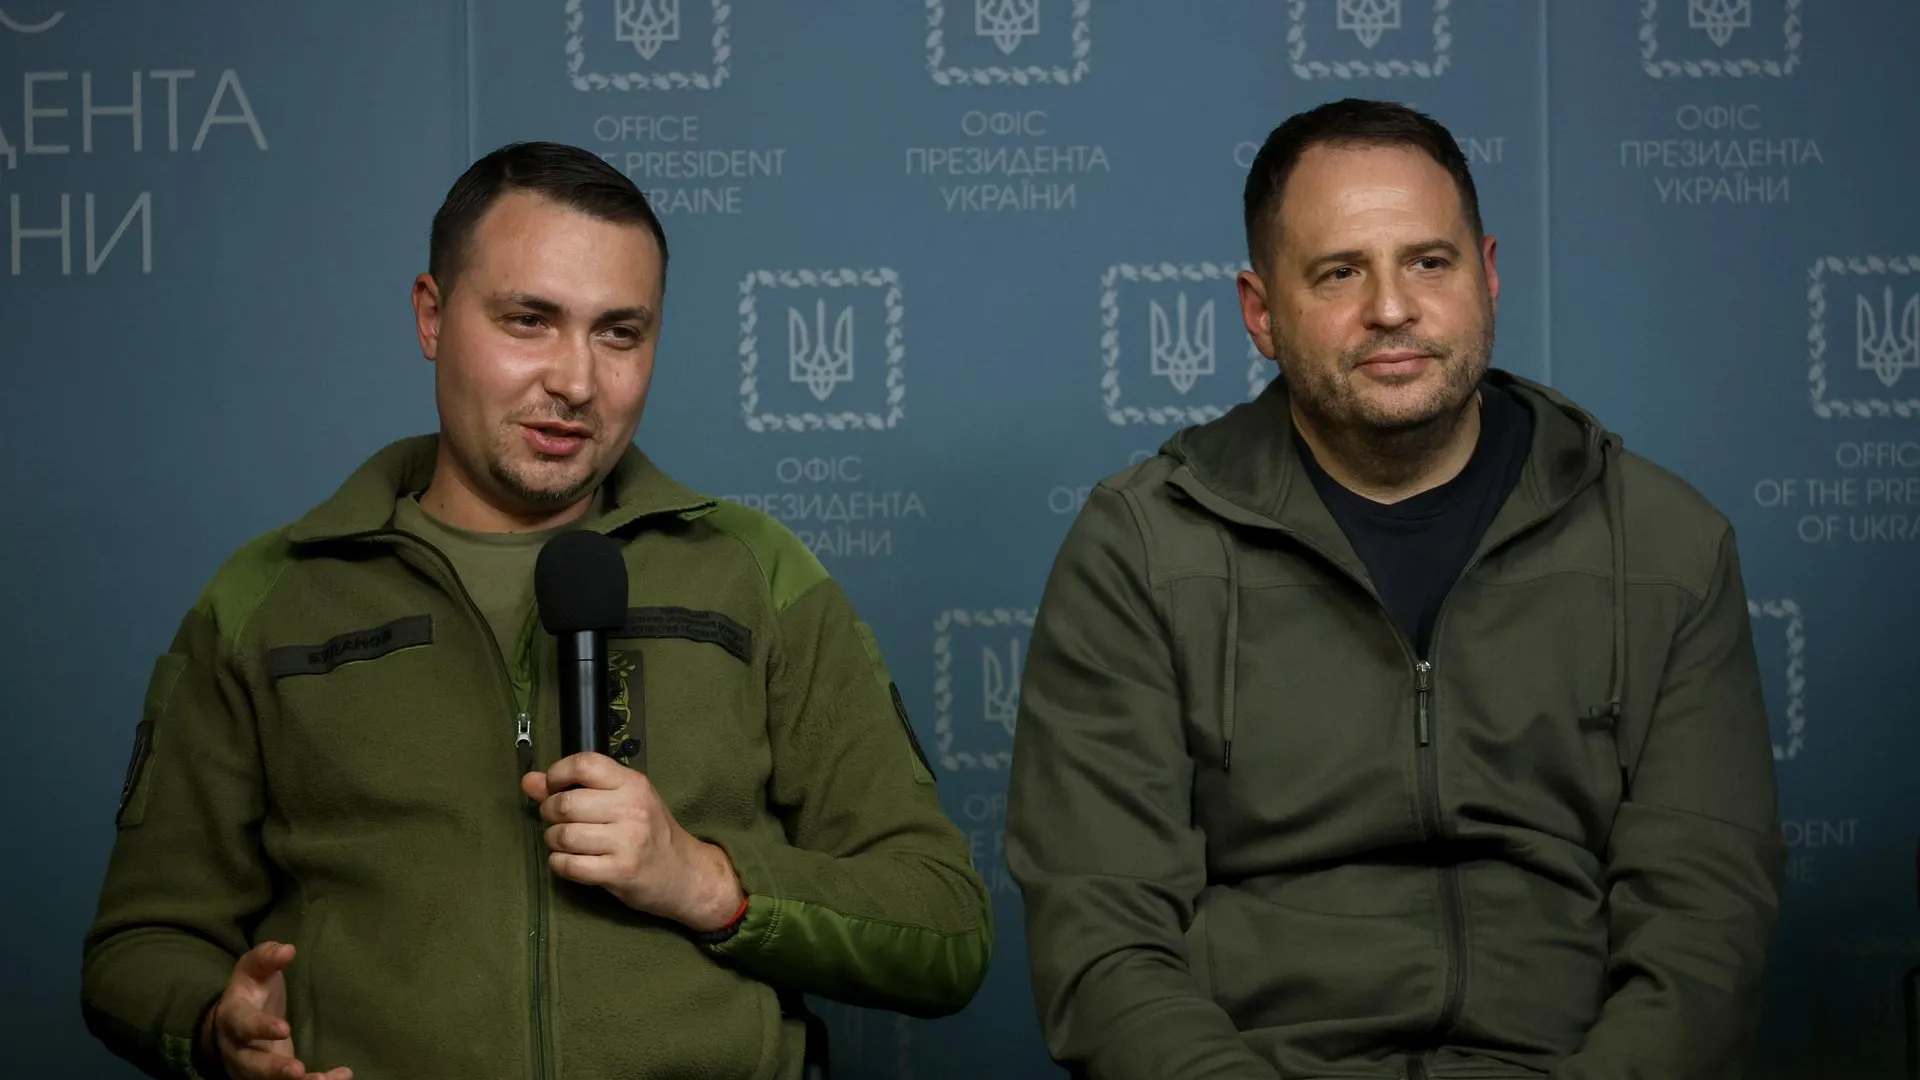 Кирилл Буданов (слева) / Pavlo Bahmut / Keystone Press Agency